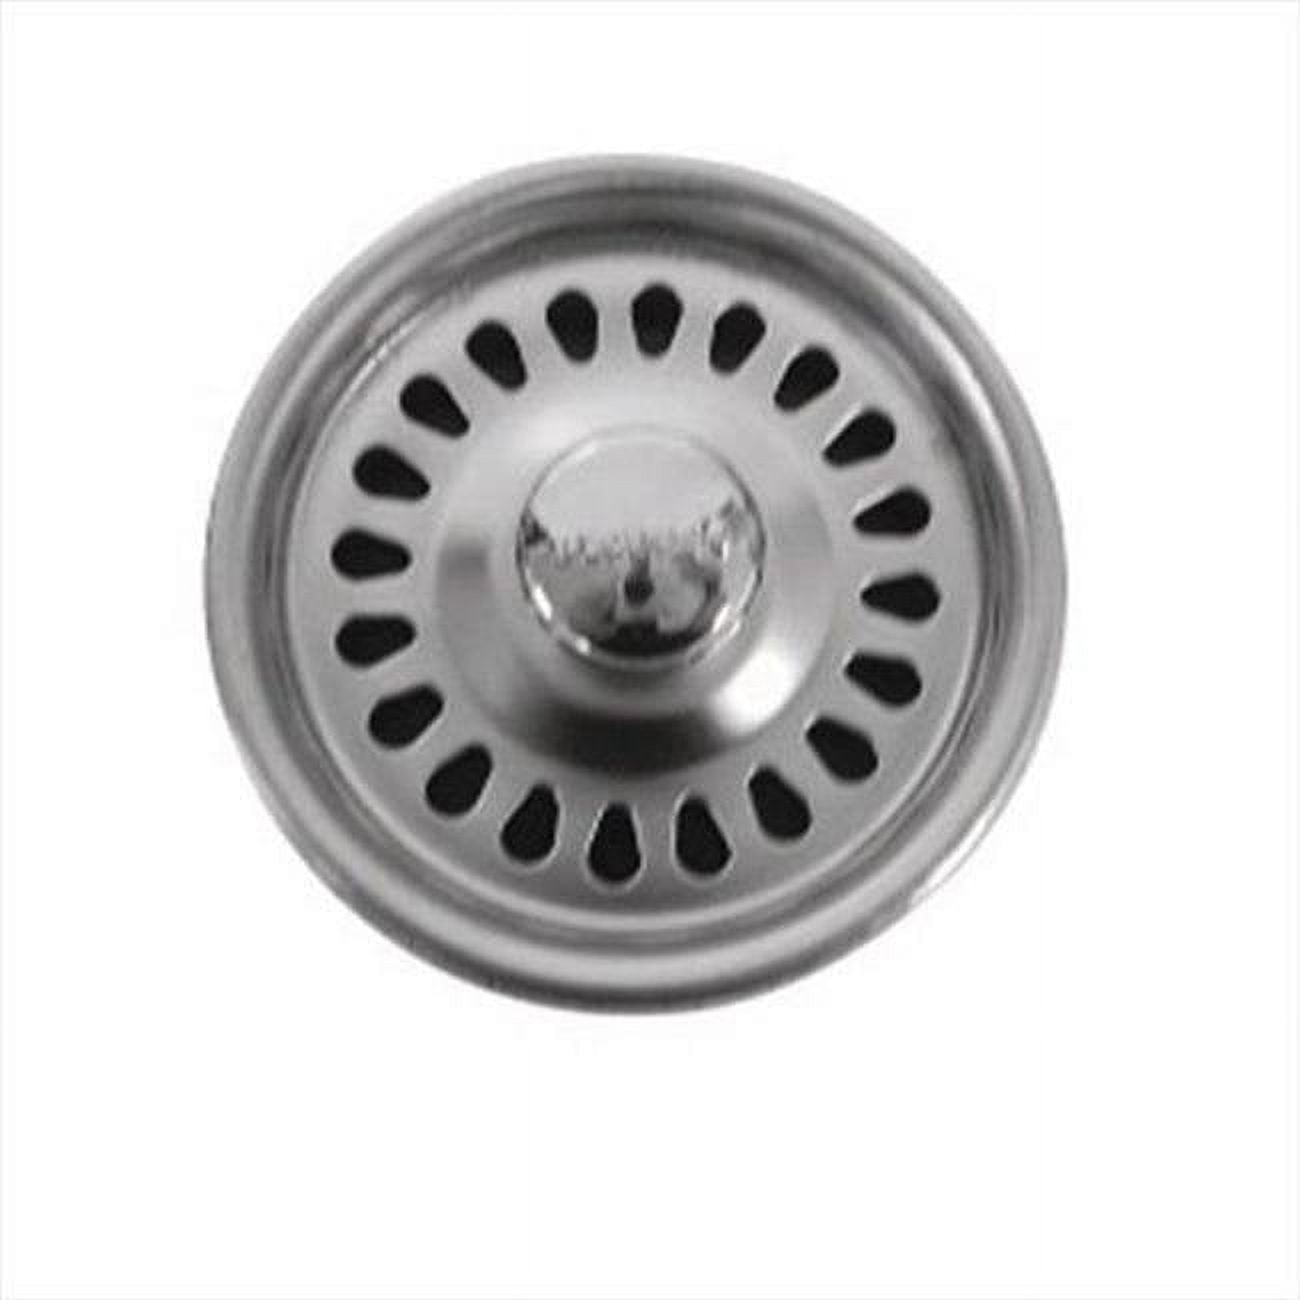 1pc Sink Filter With Plug, Kitchen Stainless Steel Water Filter, Wash Basin  Slag Screen Kitchen Stuff Clearance Kitchen Accessories Kitchen Gadgets